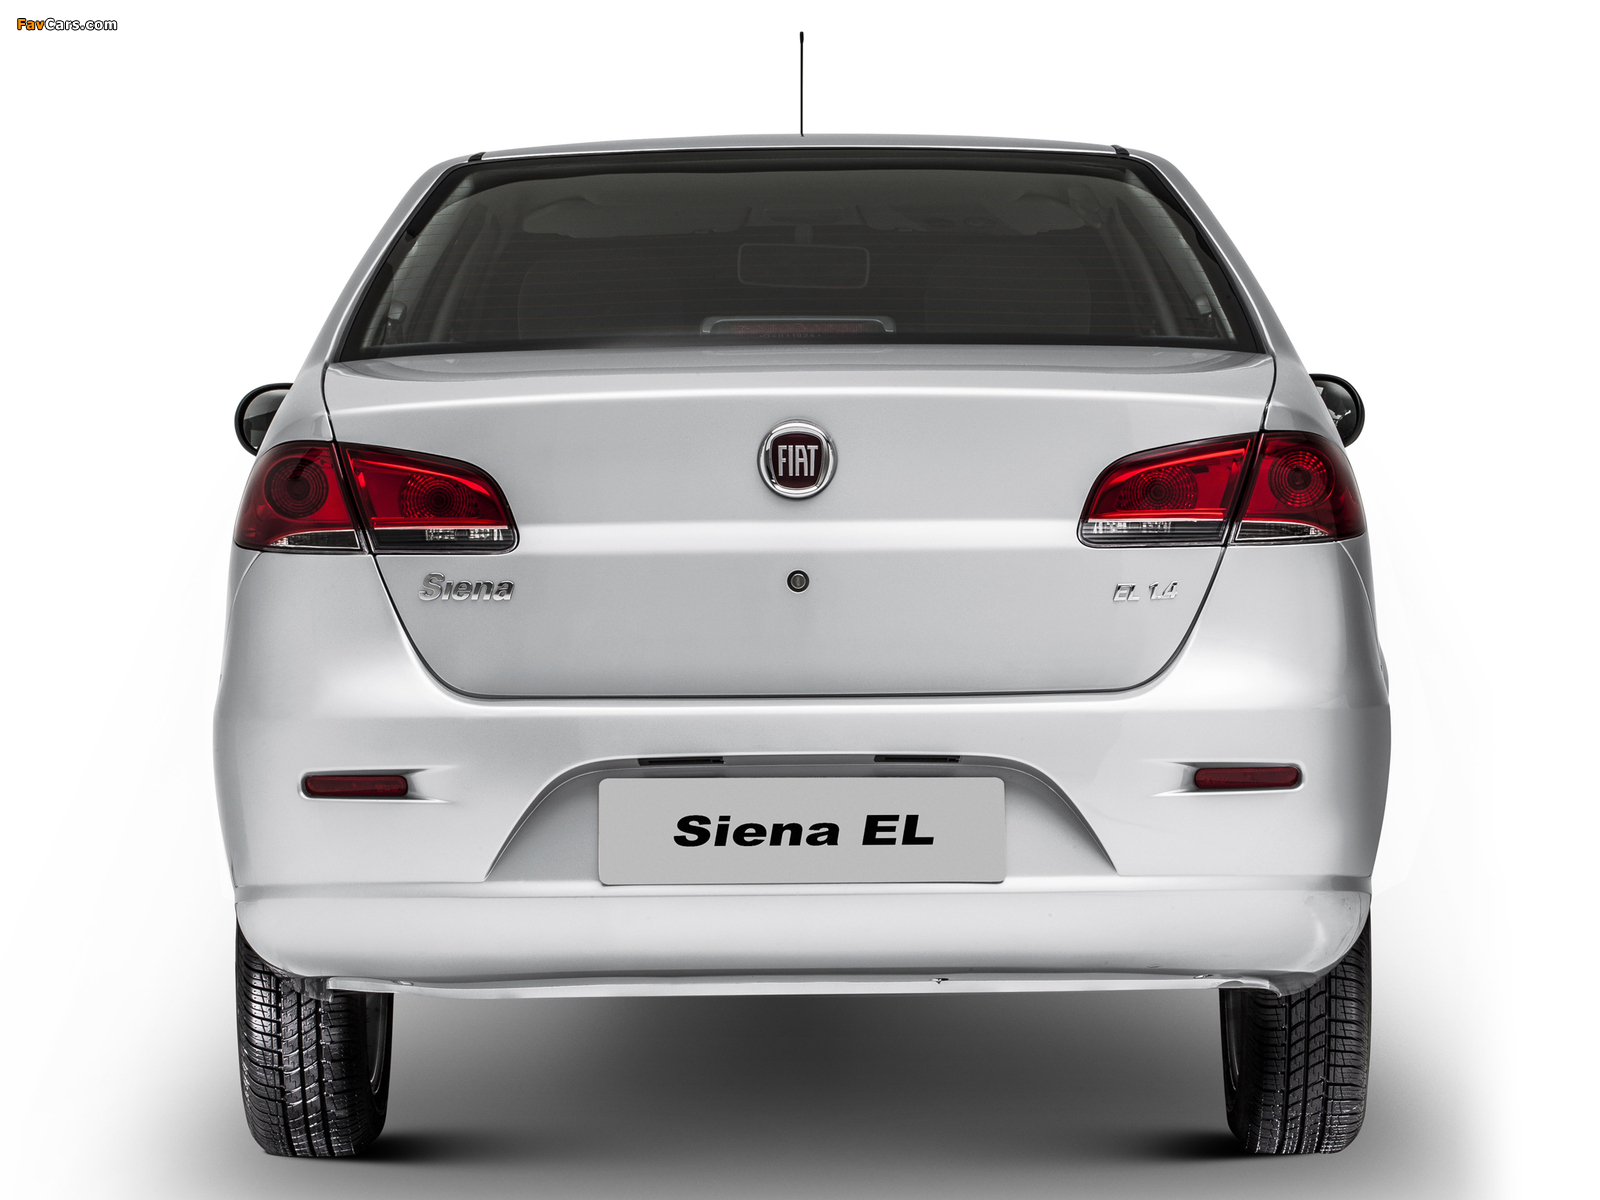 Fiat Siena EL (178) 2012 images (1600 x 1200)